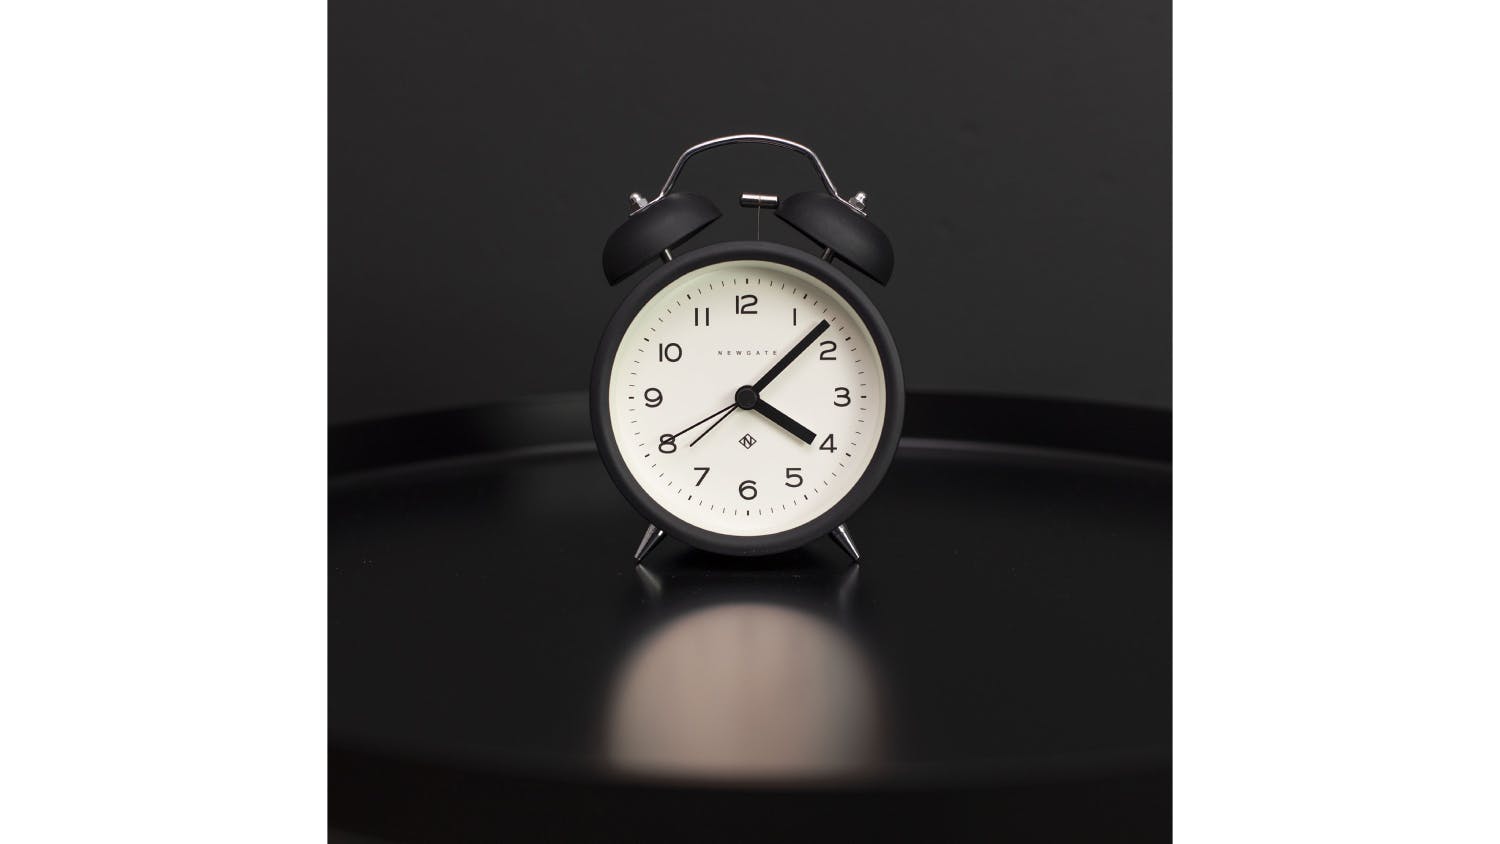 Newgate "Charlie Bell Echo" Classic Alarm Clock - Matte Black